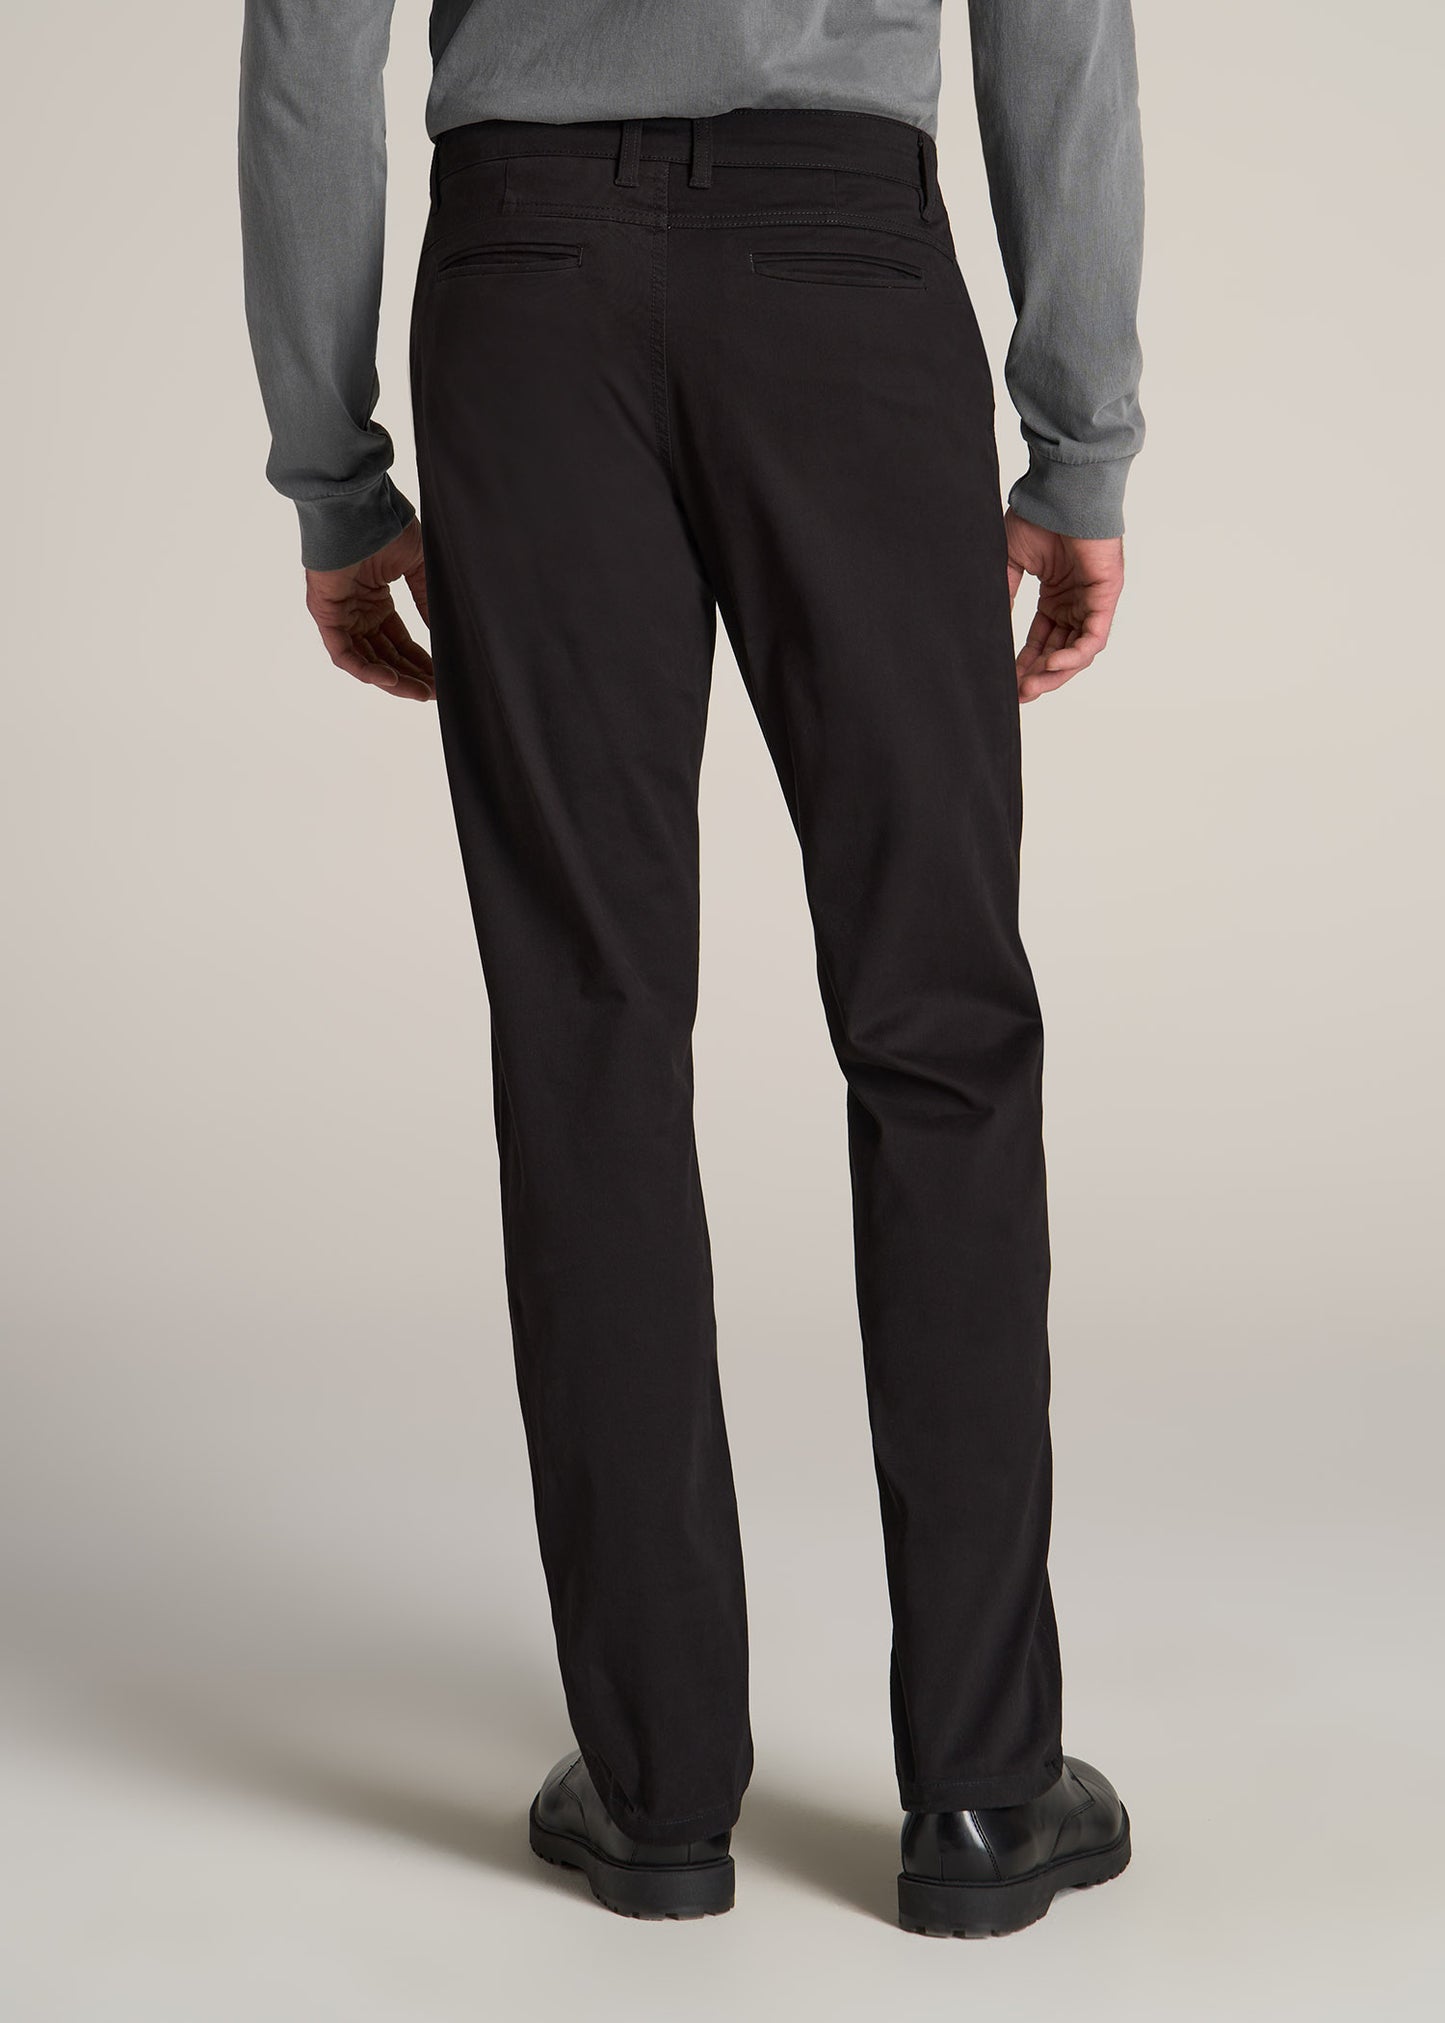 J1 STRAIGHT Leg Chinos in Black - Pants for Tall Men